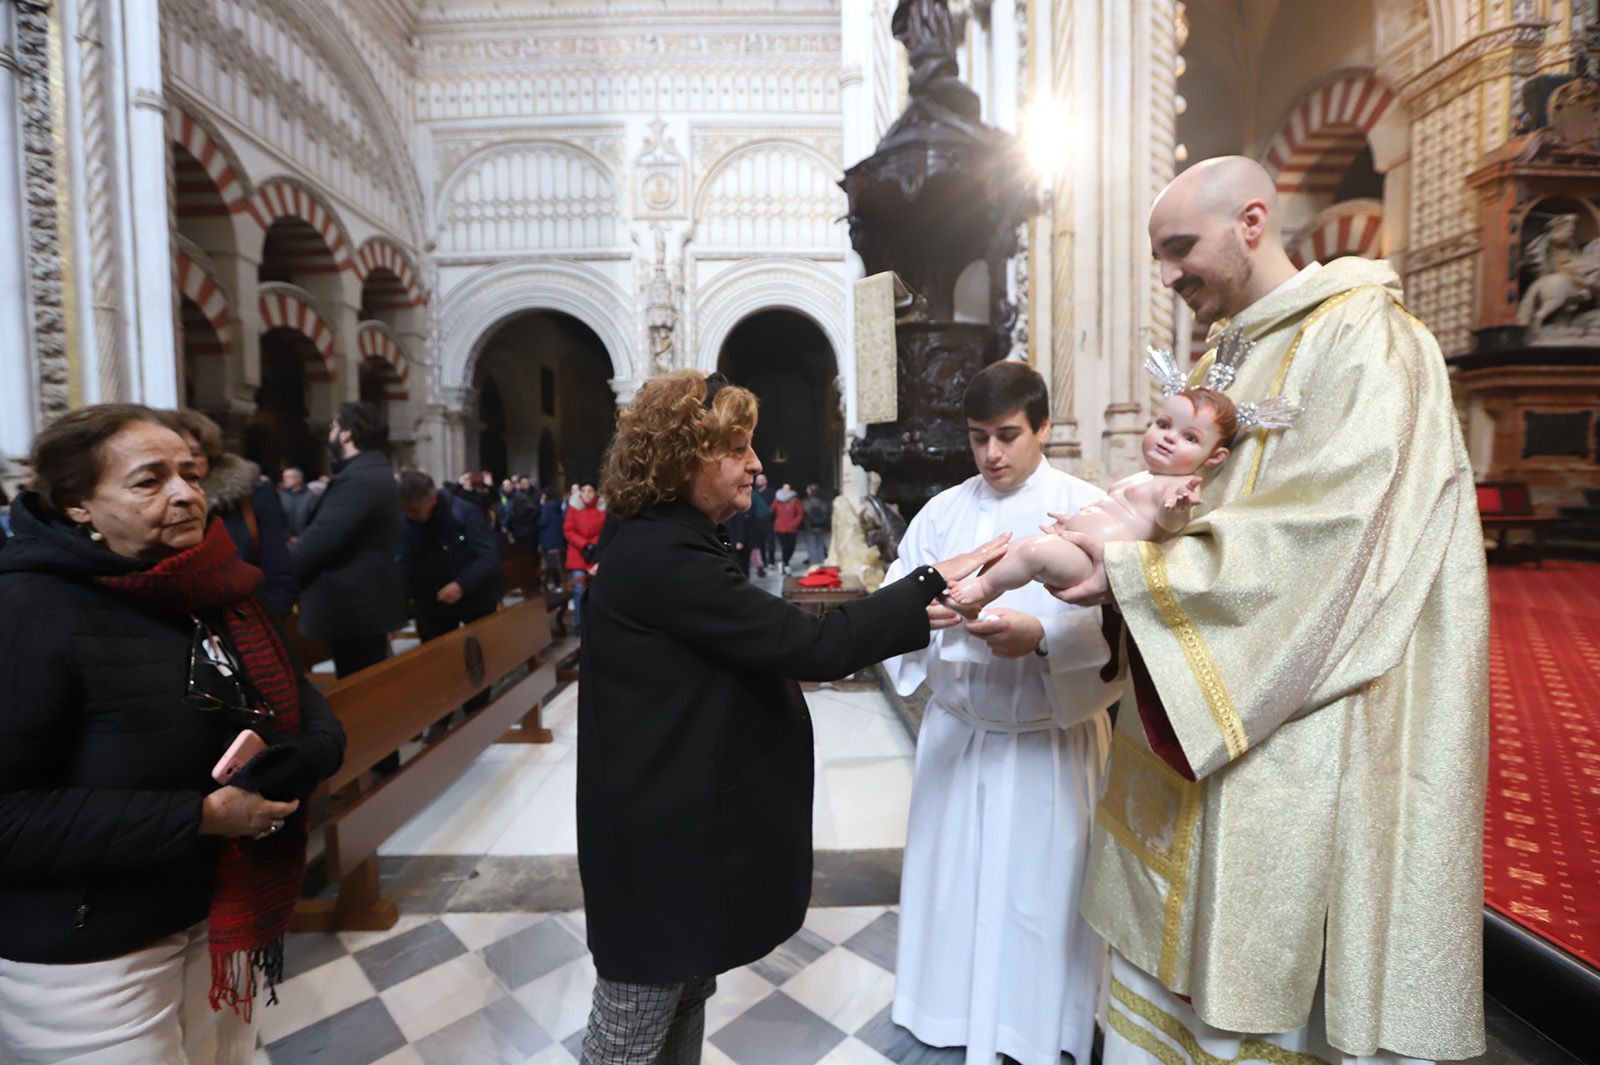 El obispo de Córdoba pide por la paz en la misa de la Navidad